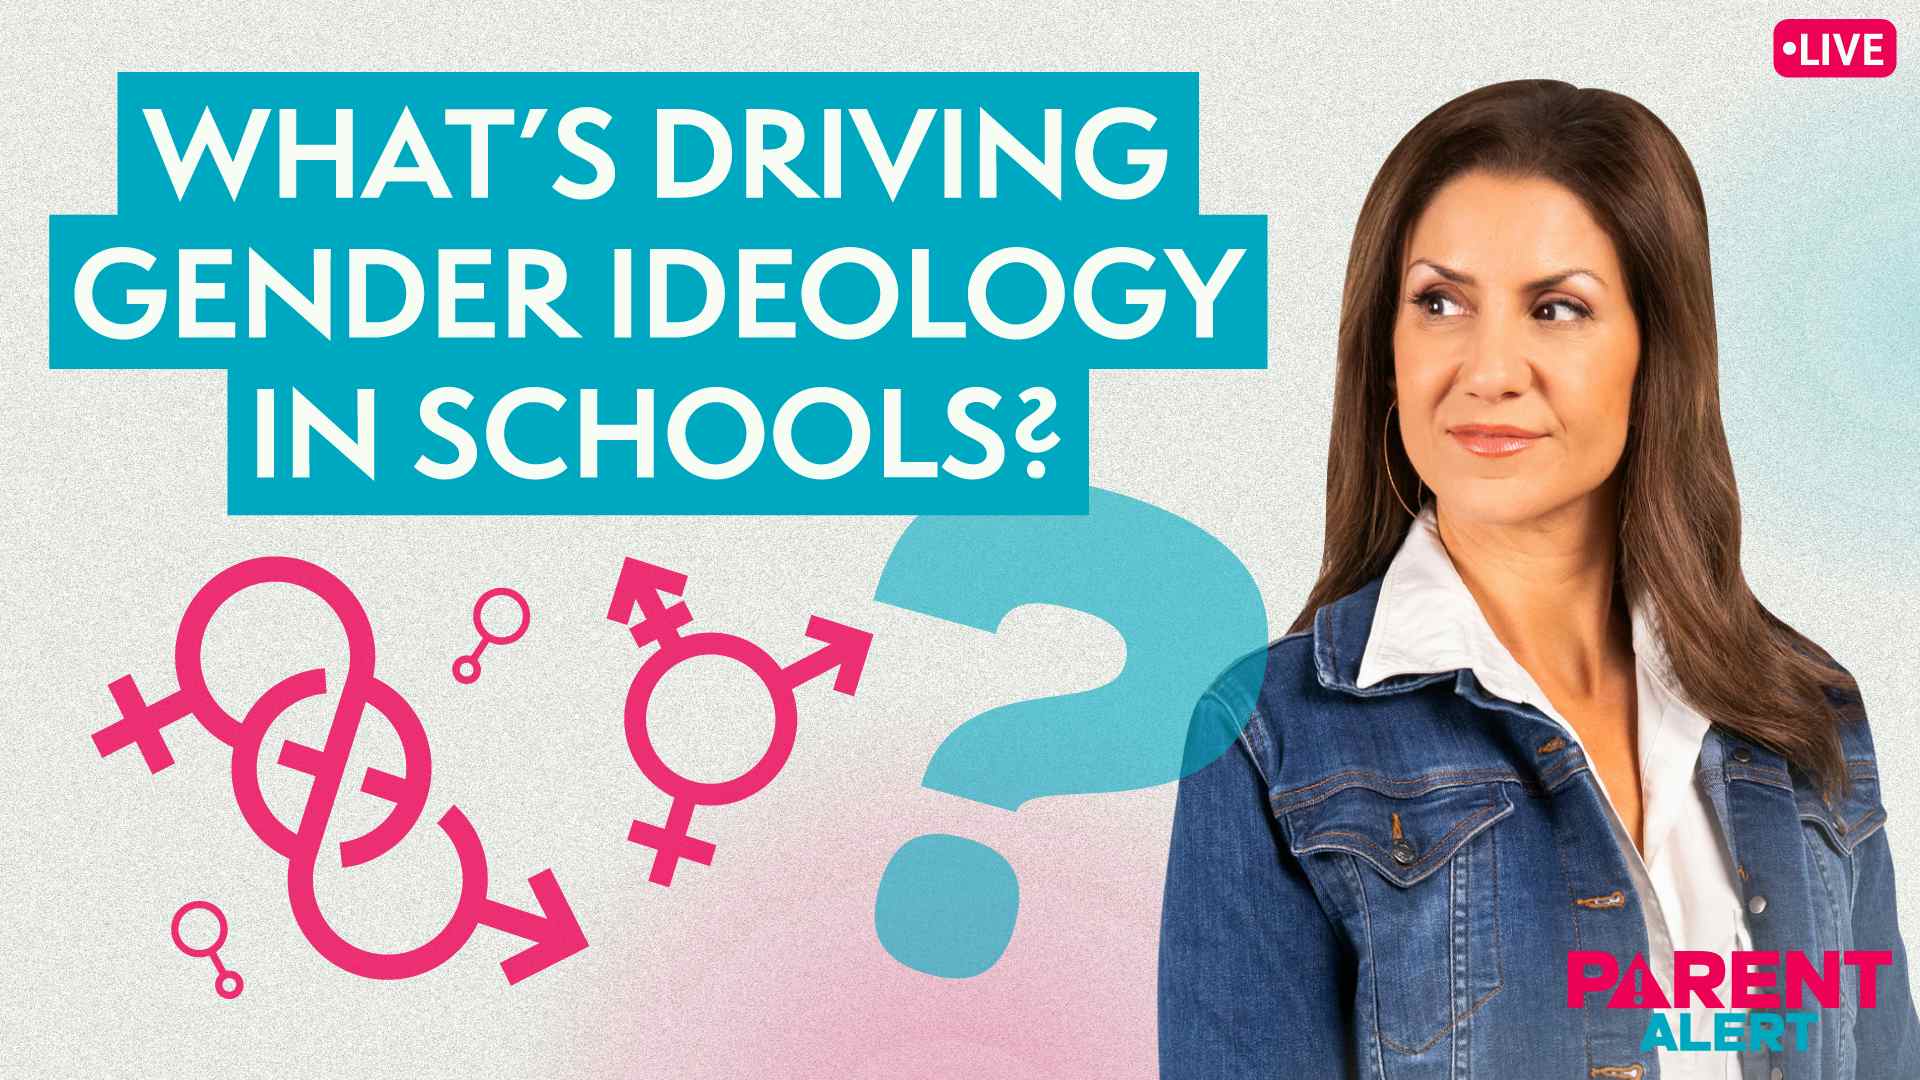 Parent Alert: What’s Driving Gender Ideology in Schools